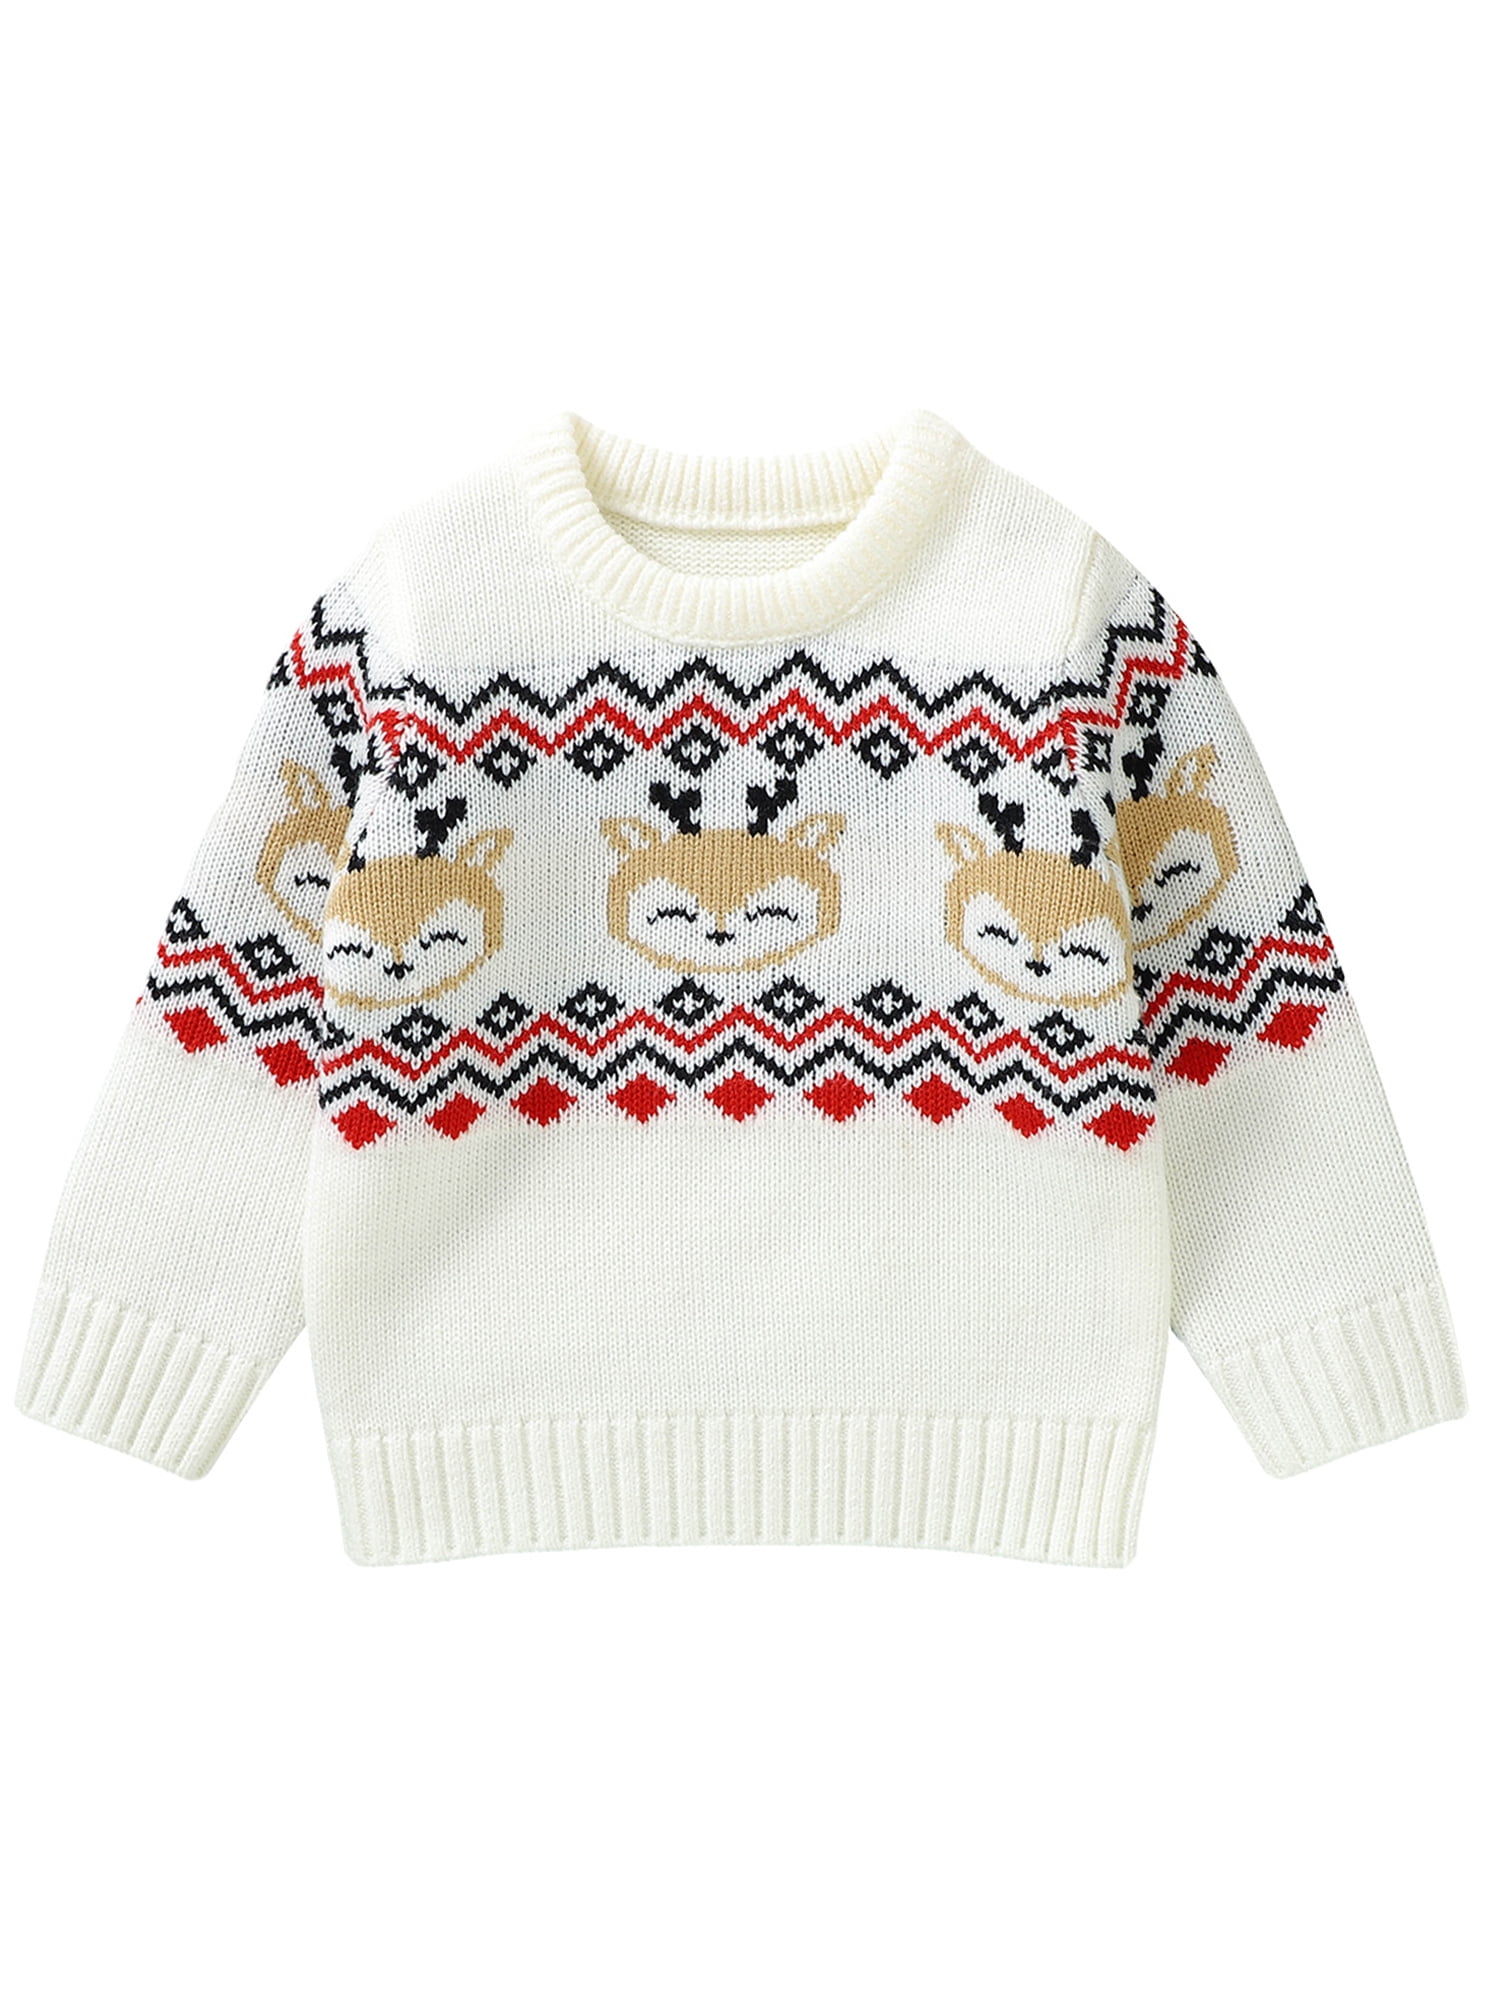 Wallarenear Baby Boy Girl Christmas Sweater Reindeer Truck Print Cable ...